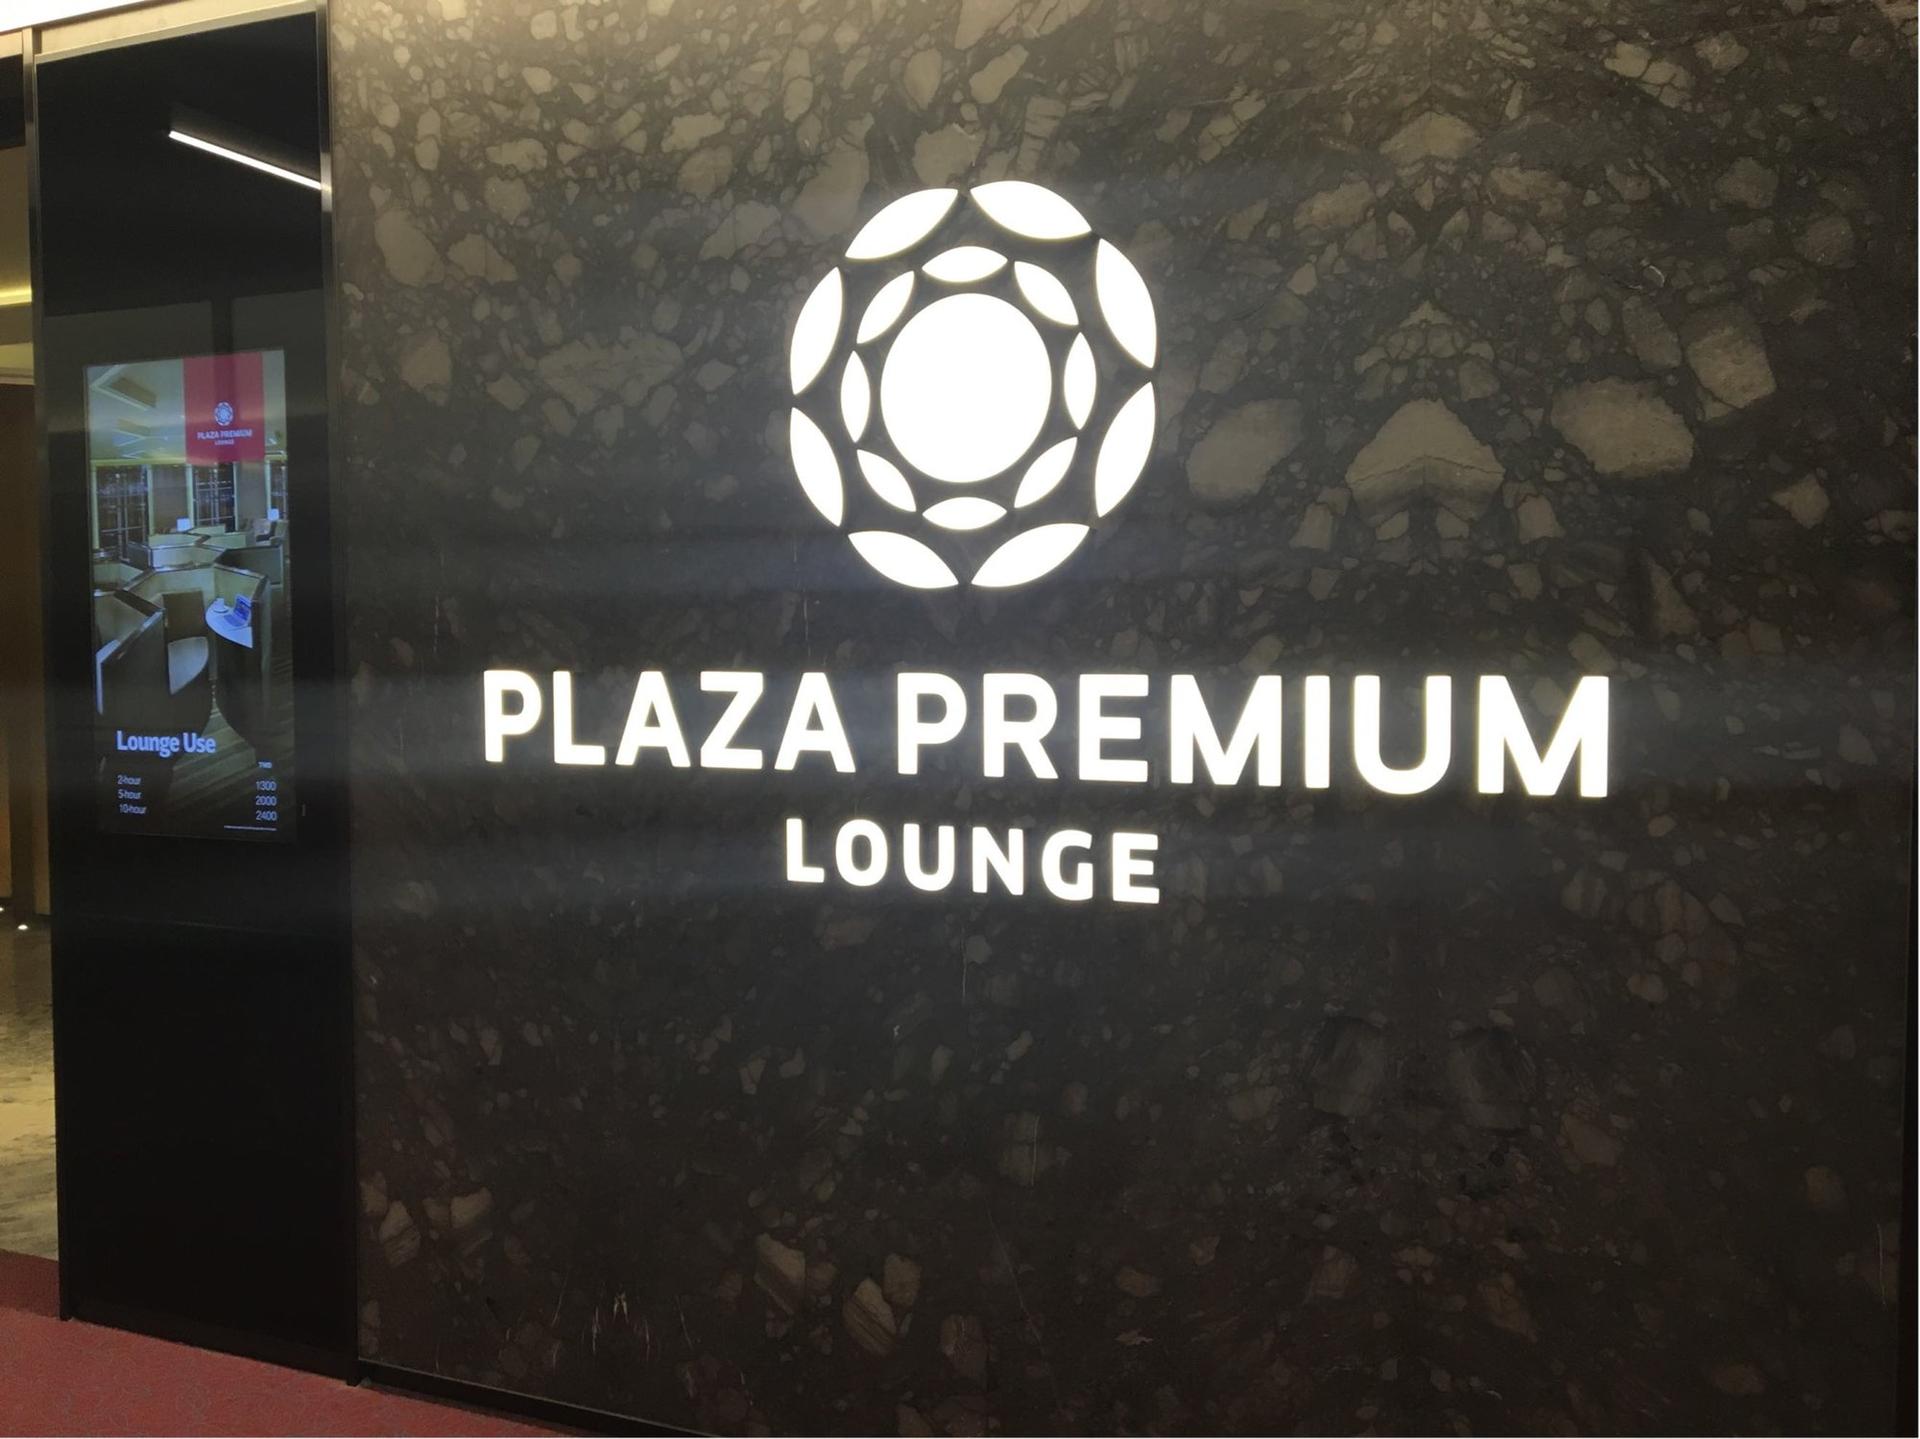 Plaza Premium Lounge (Zone C) image 20 of 36